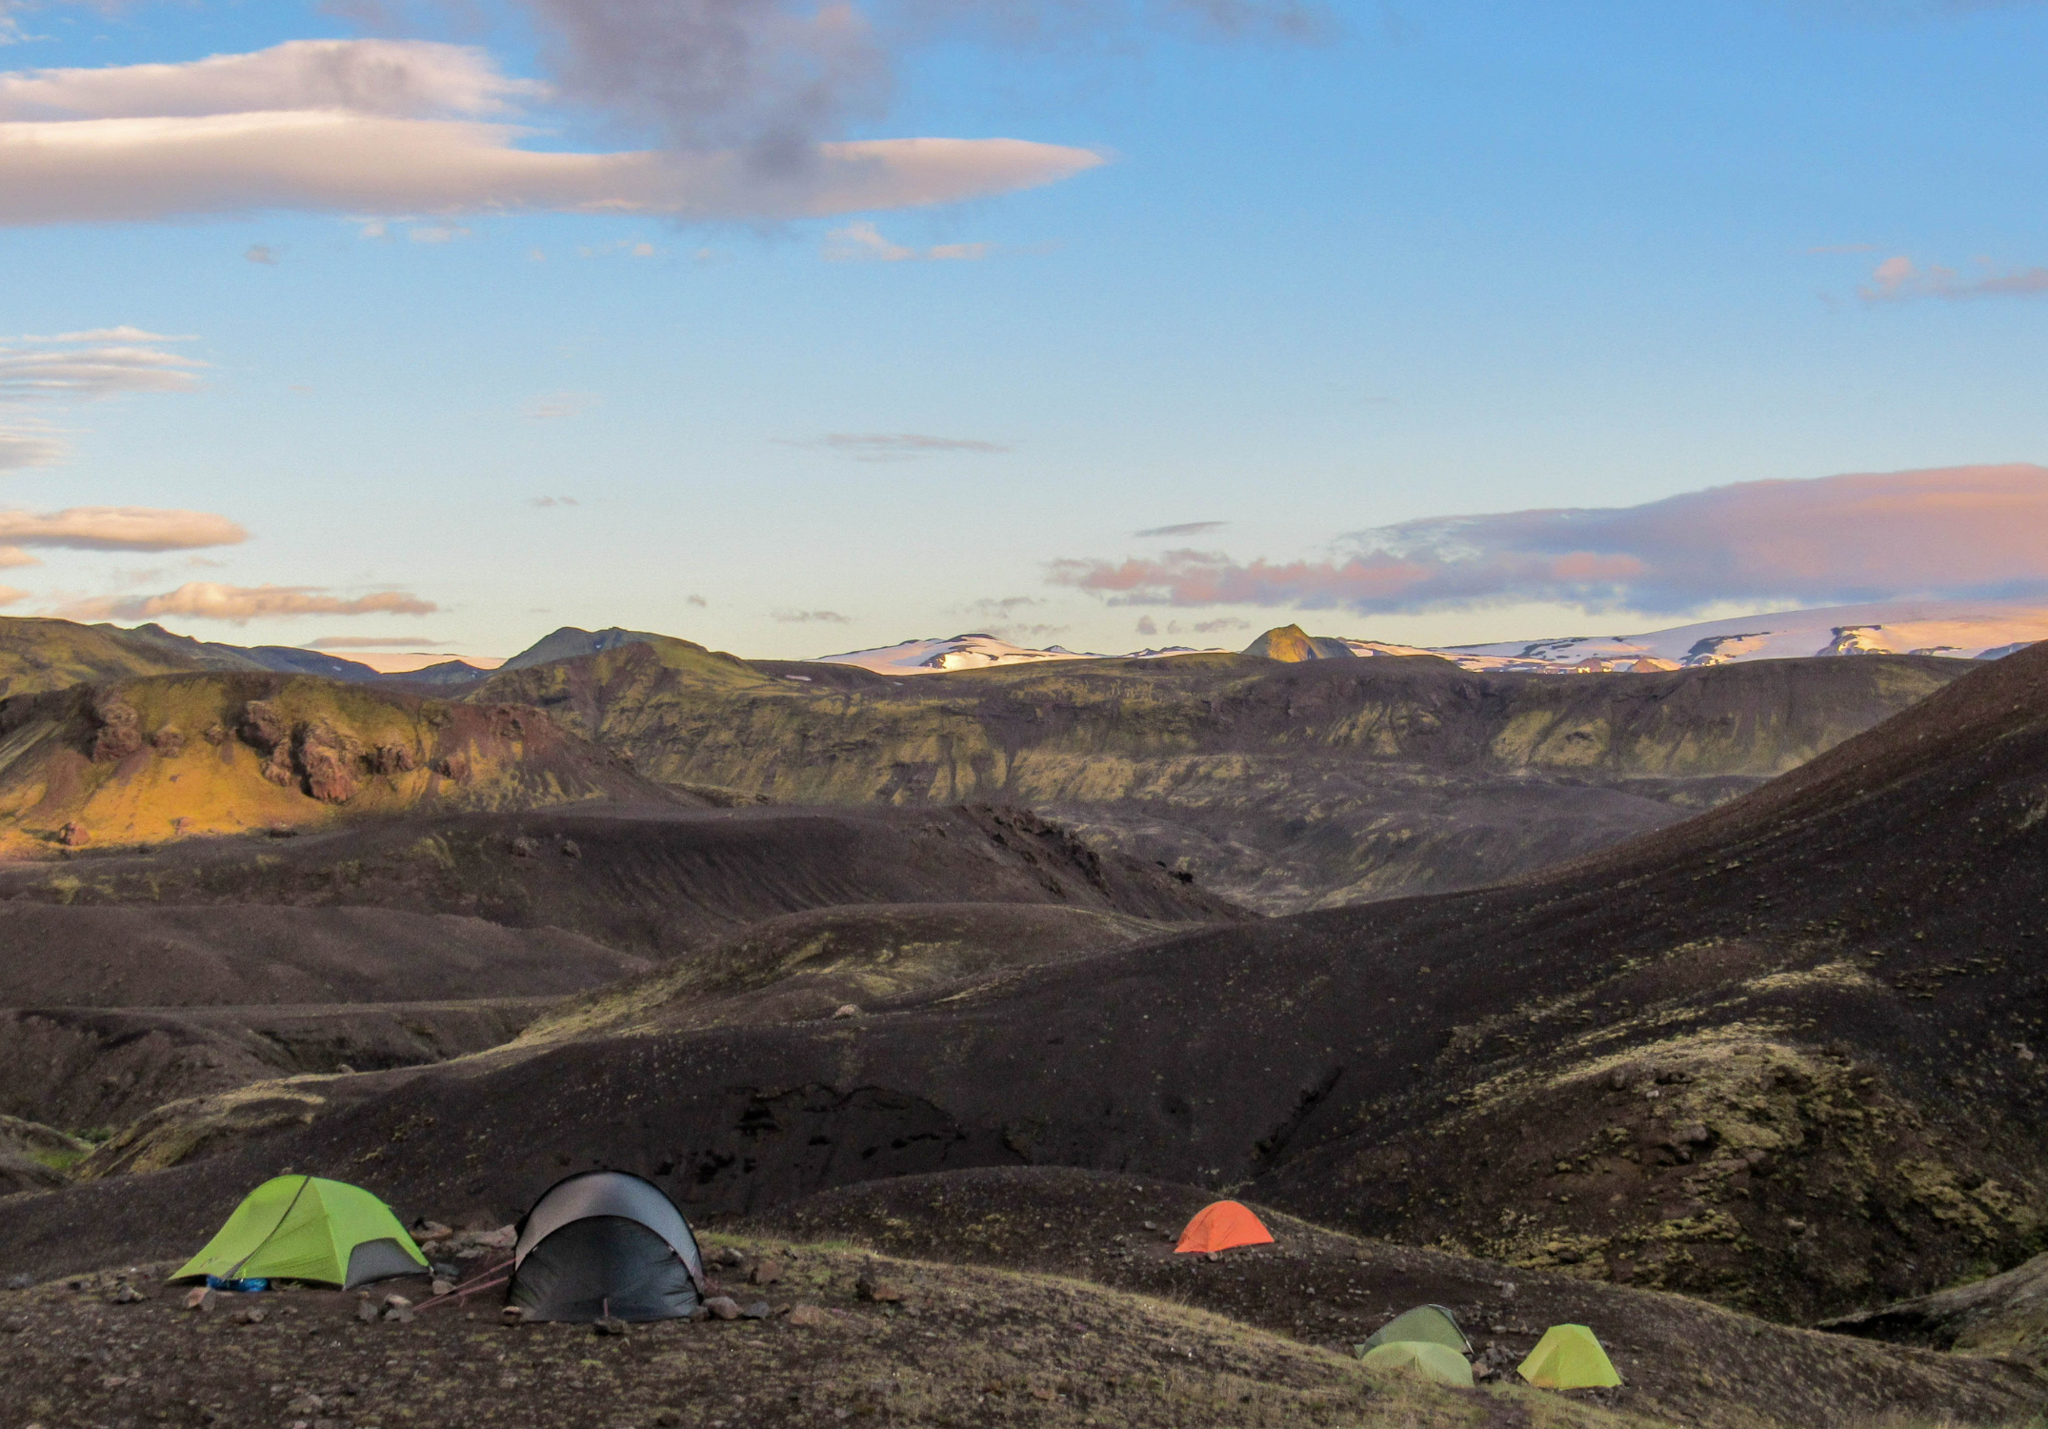 Laugavegur Trail Camping, Iceland. Photo: Canva - https://www.canva.com/photos/MADLGtWyuiI-sunset-landscape-with-campsite-of-botnar-ermstur-laugavegur-trail-from-thorsmork-to-landmannalaugar-iceland/